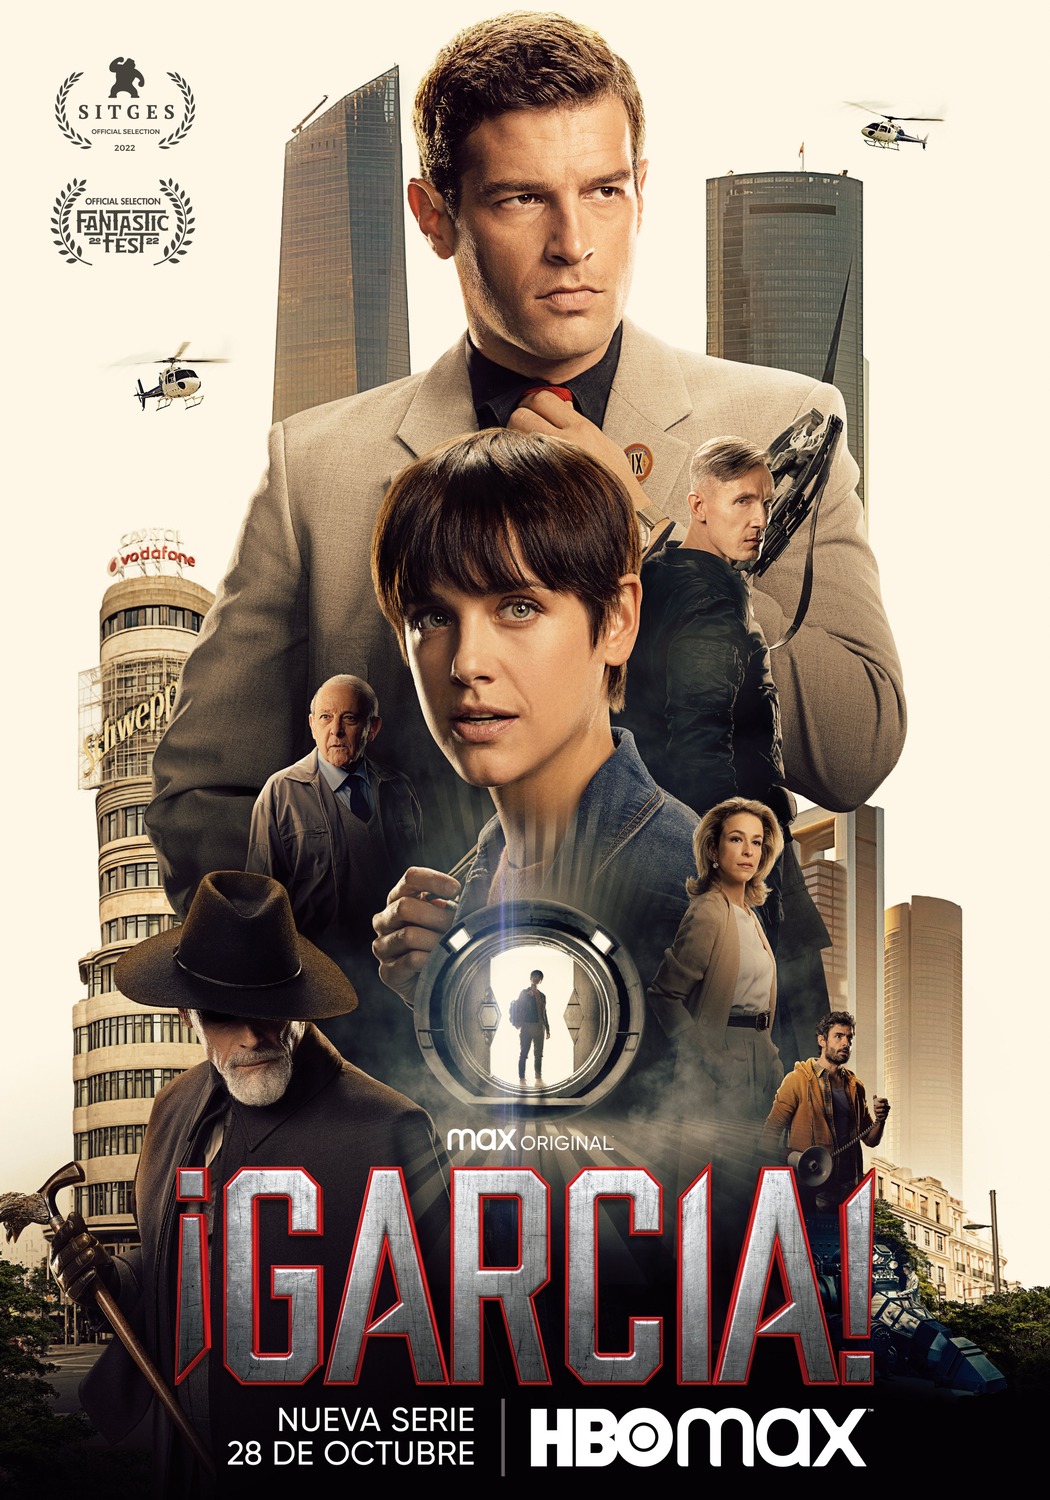 Extra Large TV Poster Image for ¡García! 